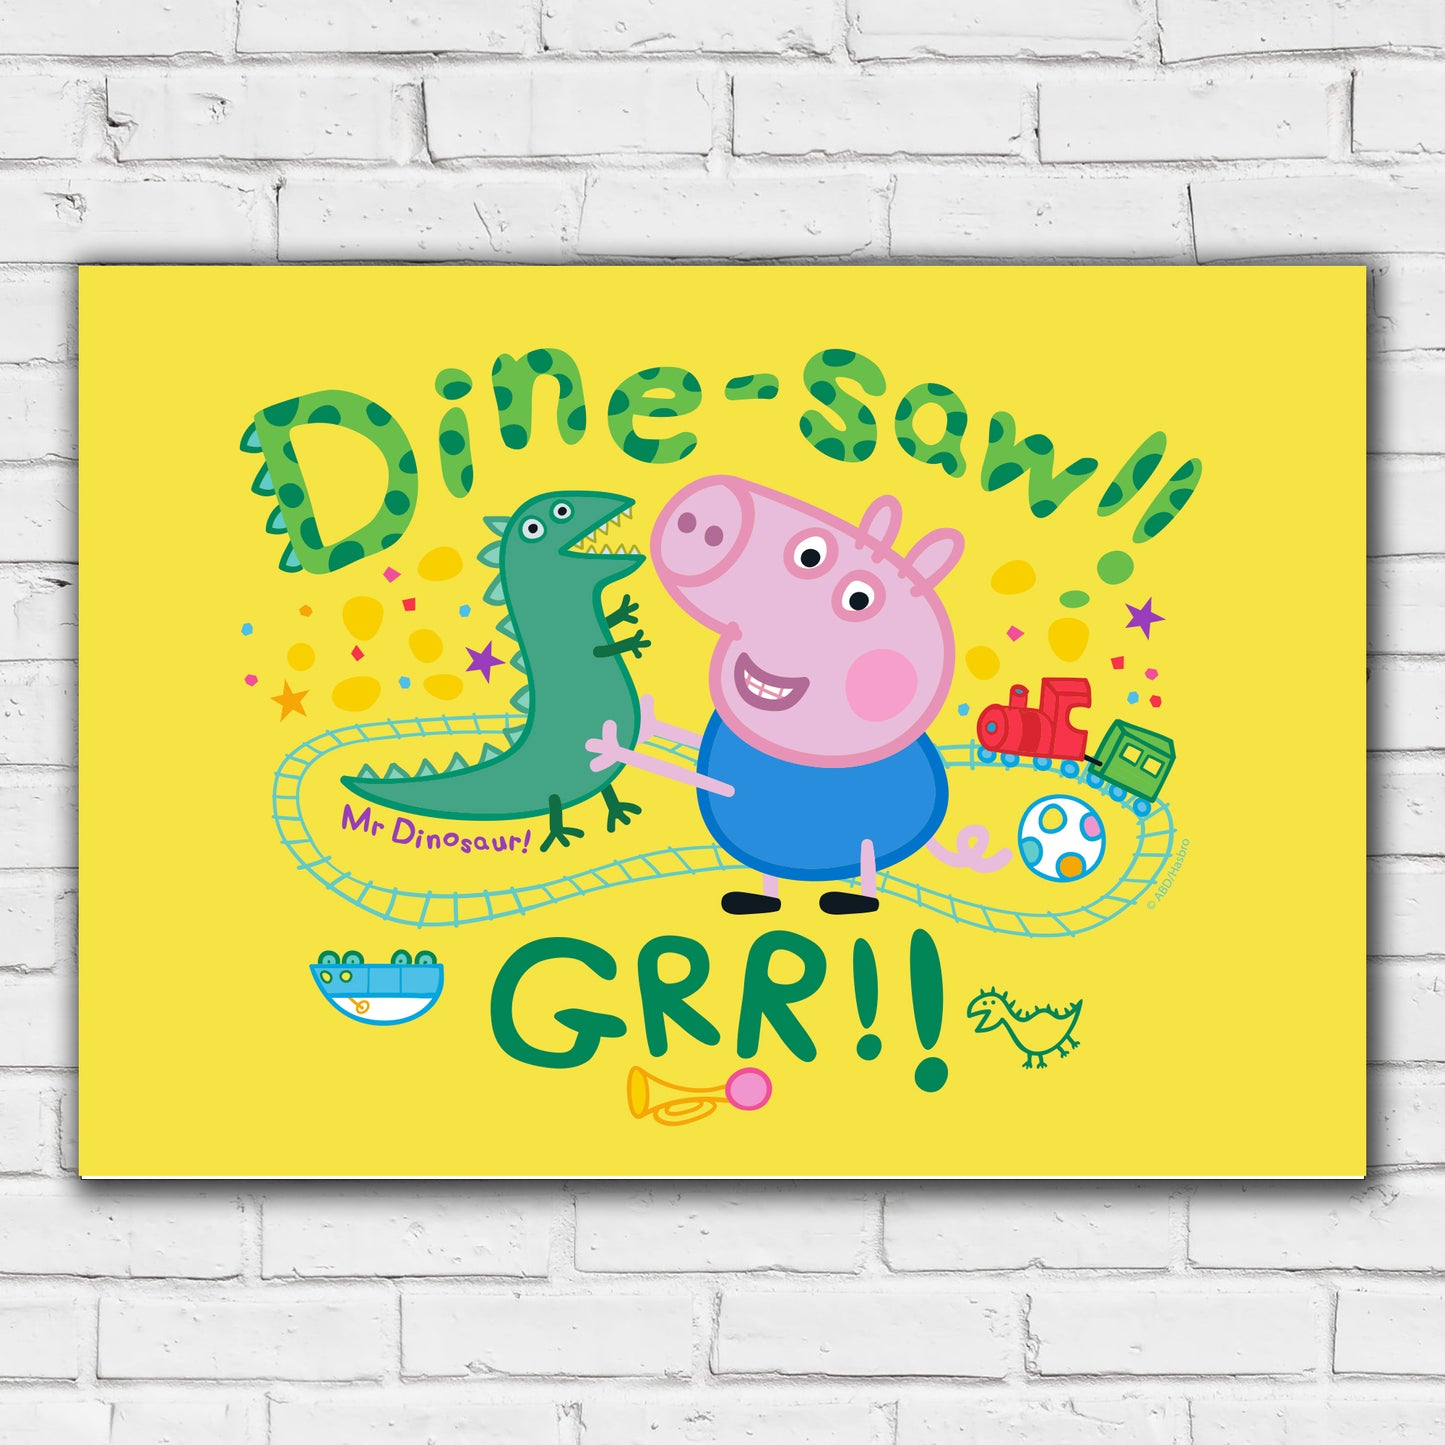 Peppa Pig Print - George Dine-saw Grr Yellow Poster Wall Art